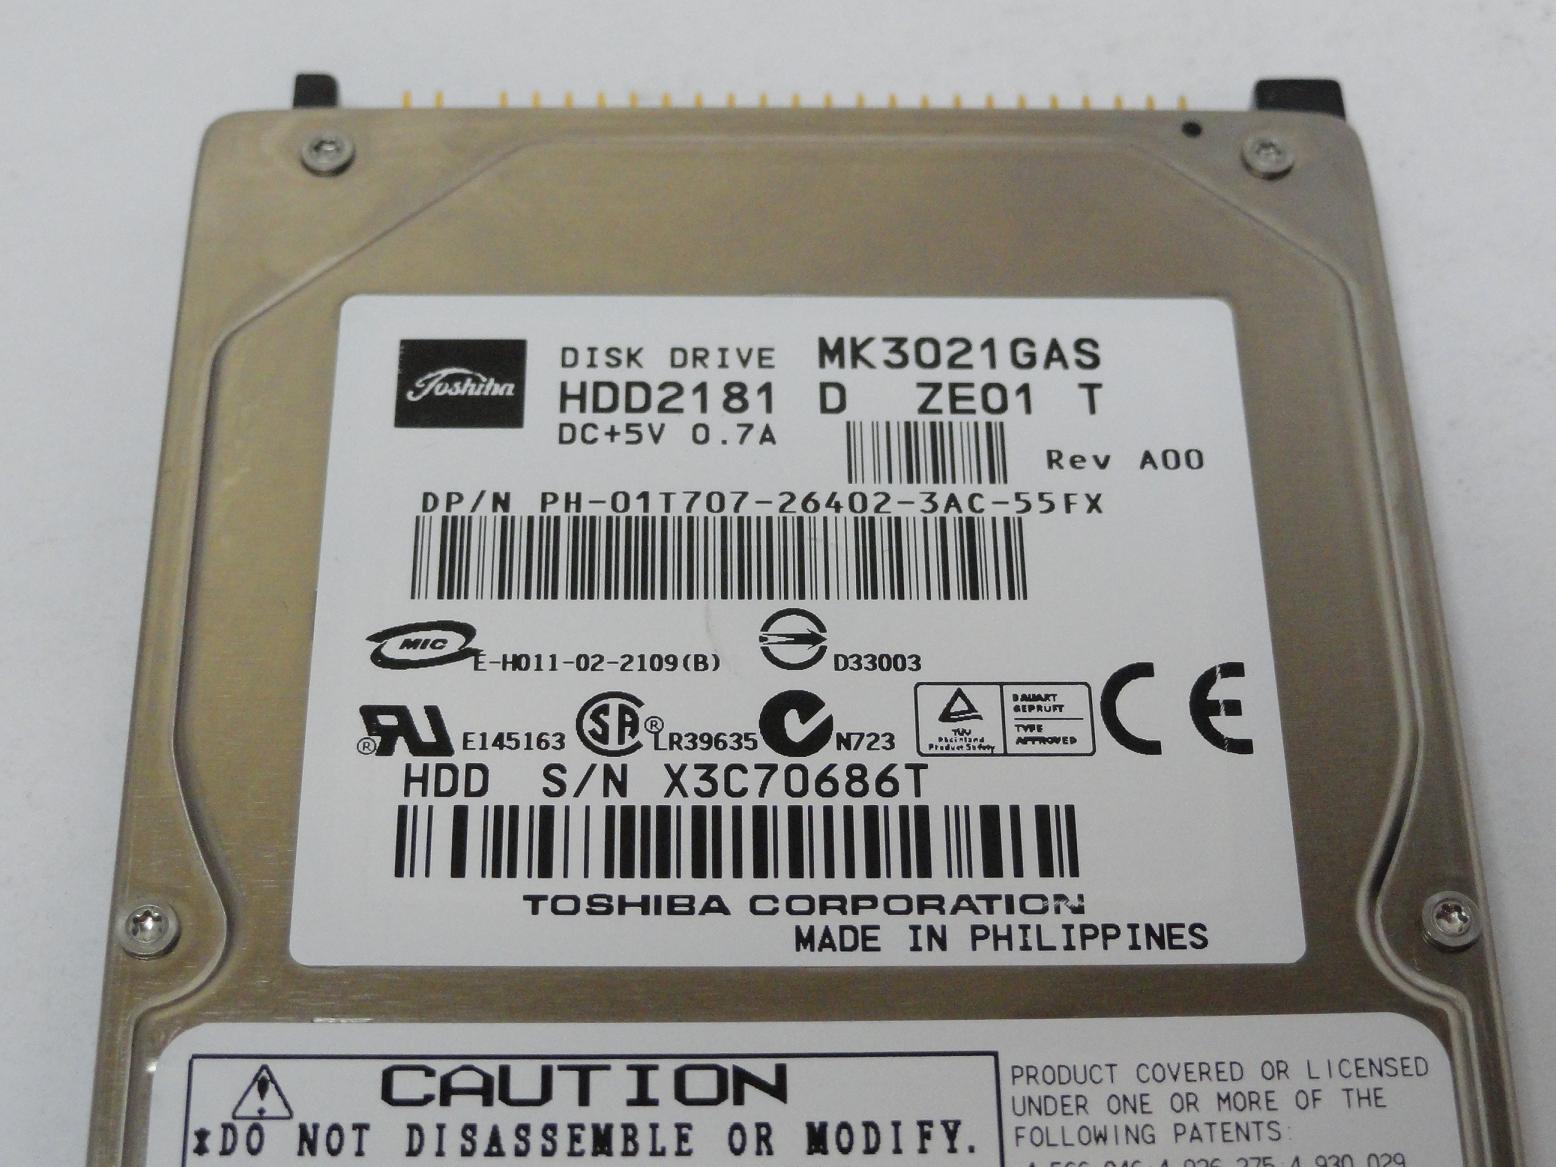 PR12556_HDD2181_Toshiba Dell 30GB IDE 4200rpm 2.5in HDD - Image3